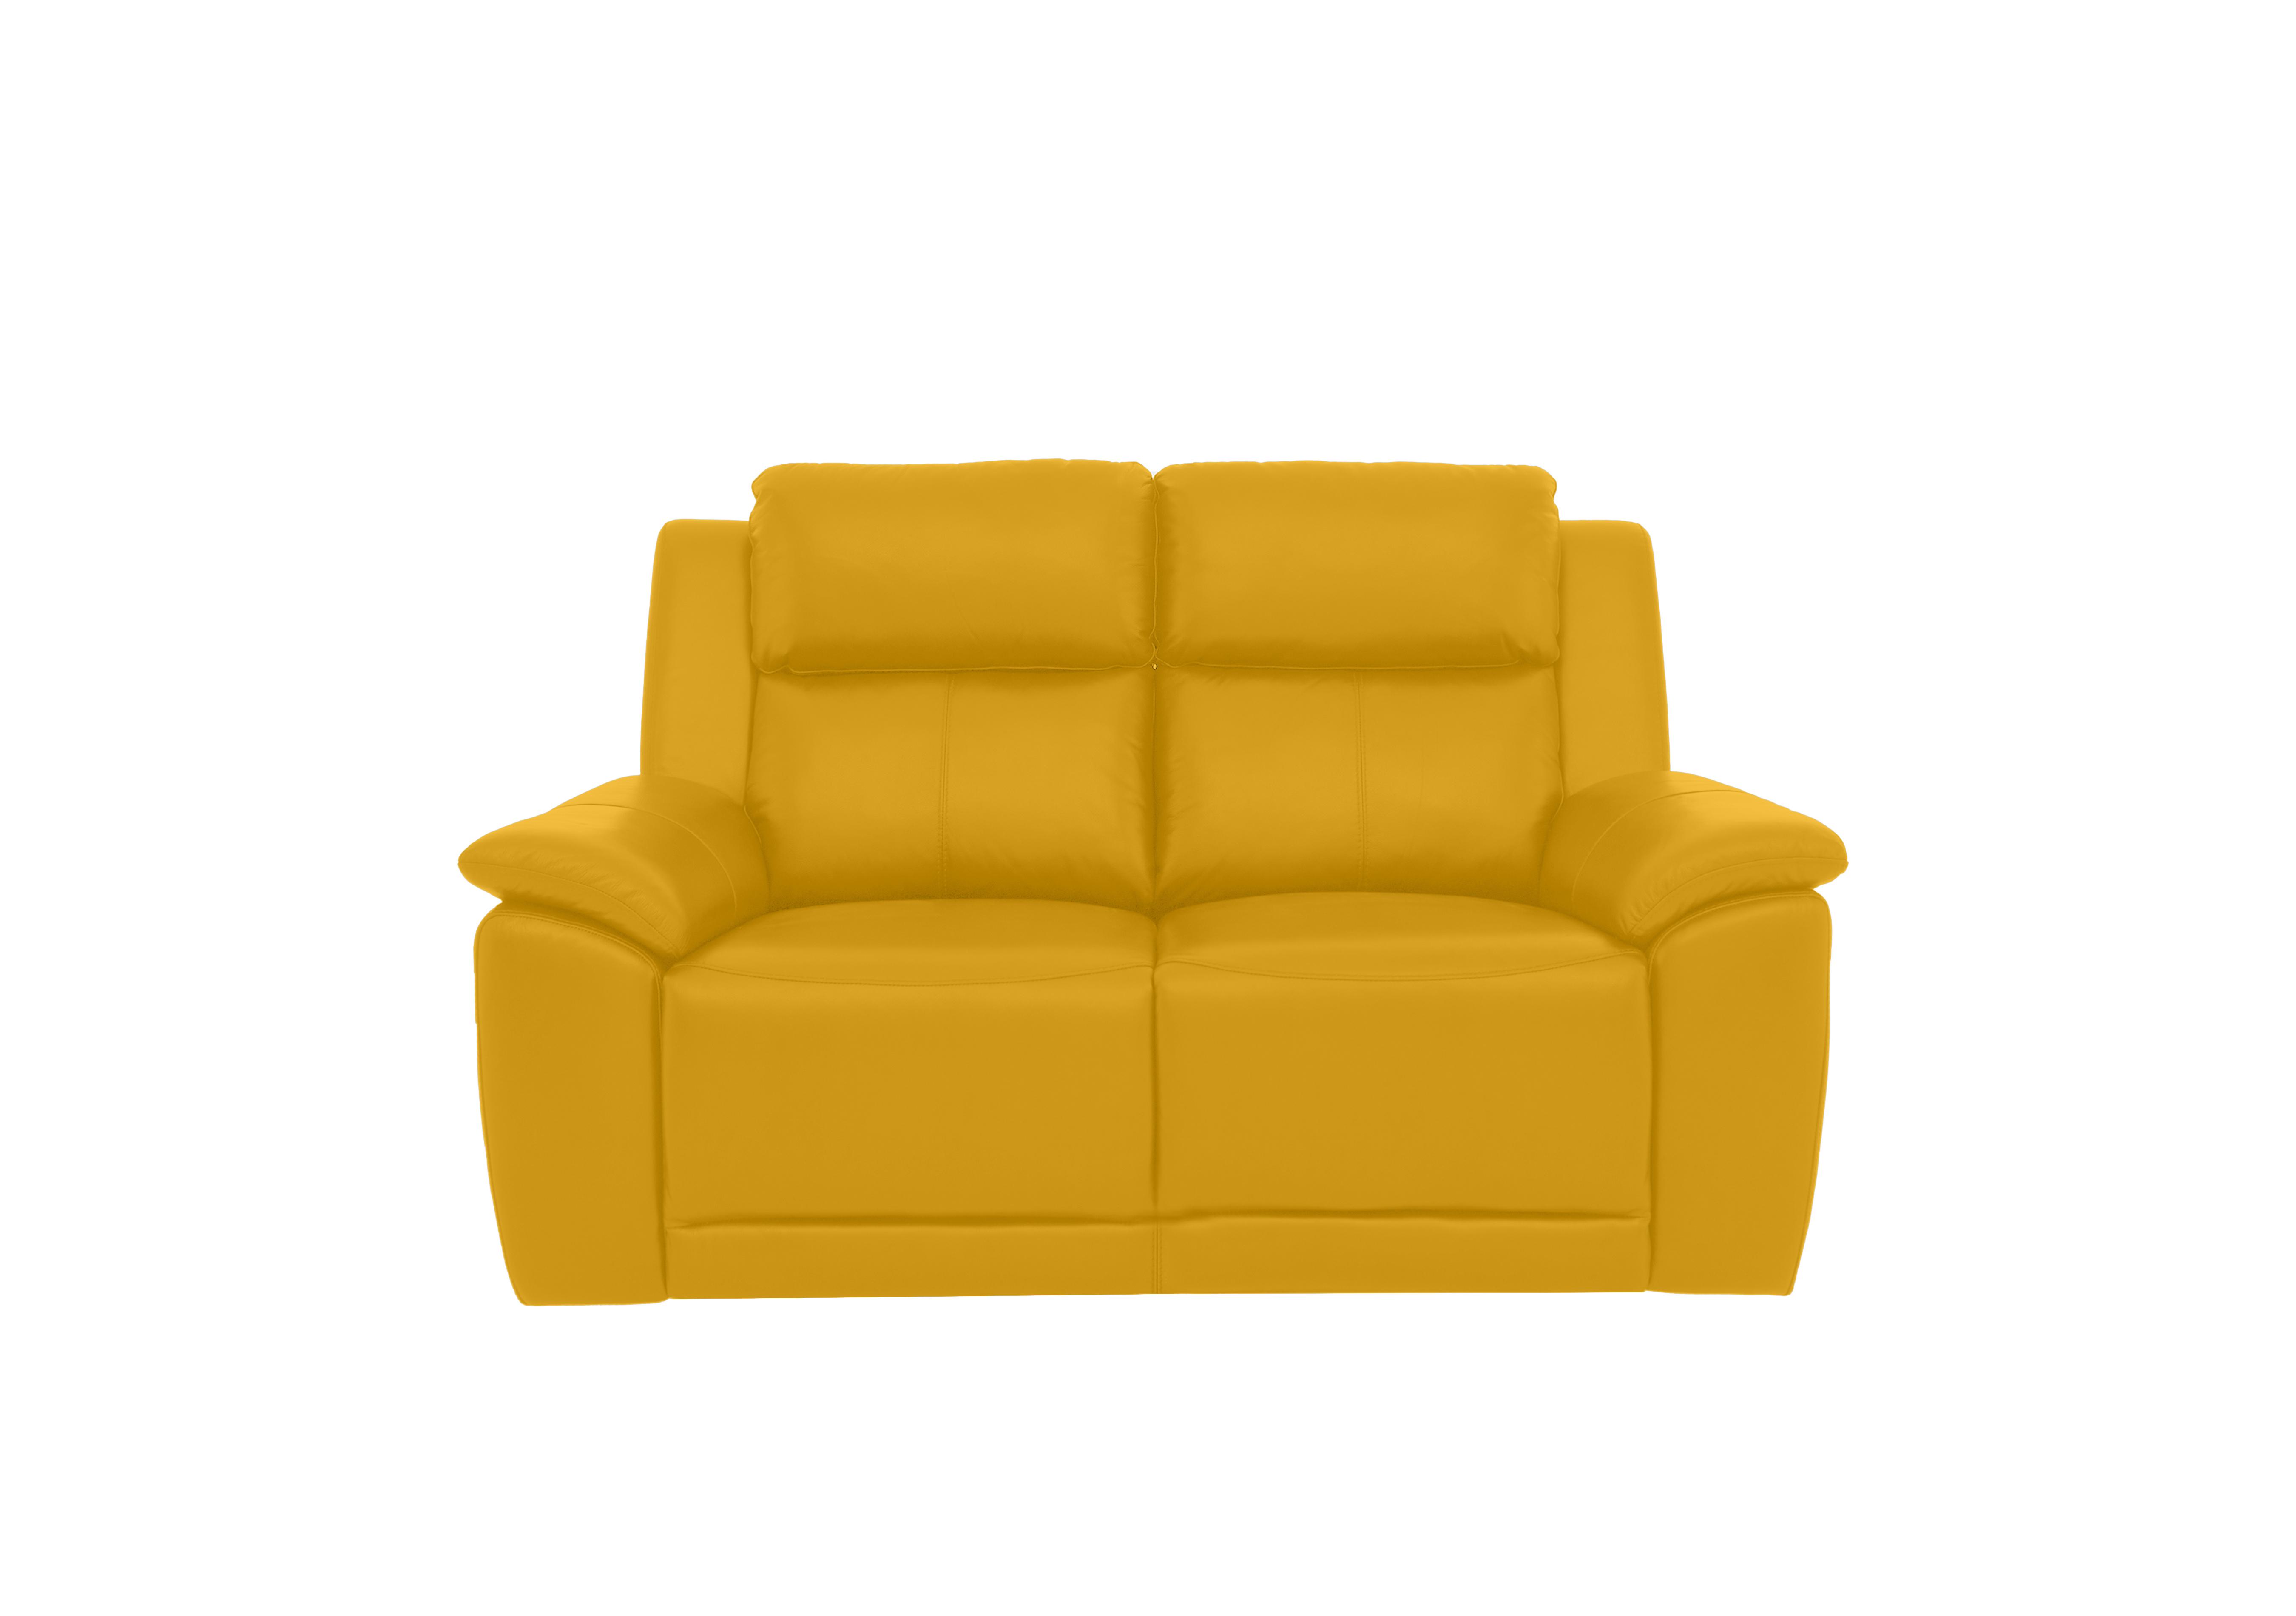 Utah 2 Seater Leather Sofa in Giallo Le-9310 on Furniture Village